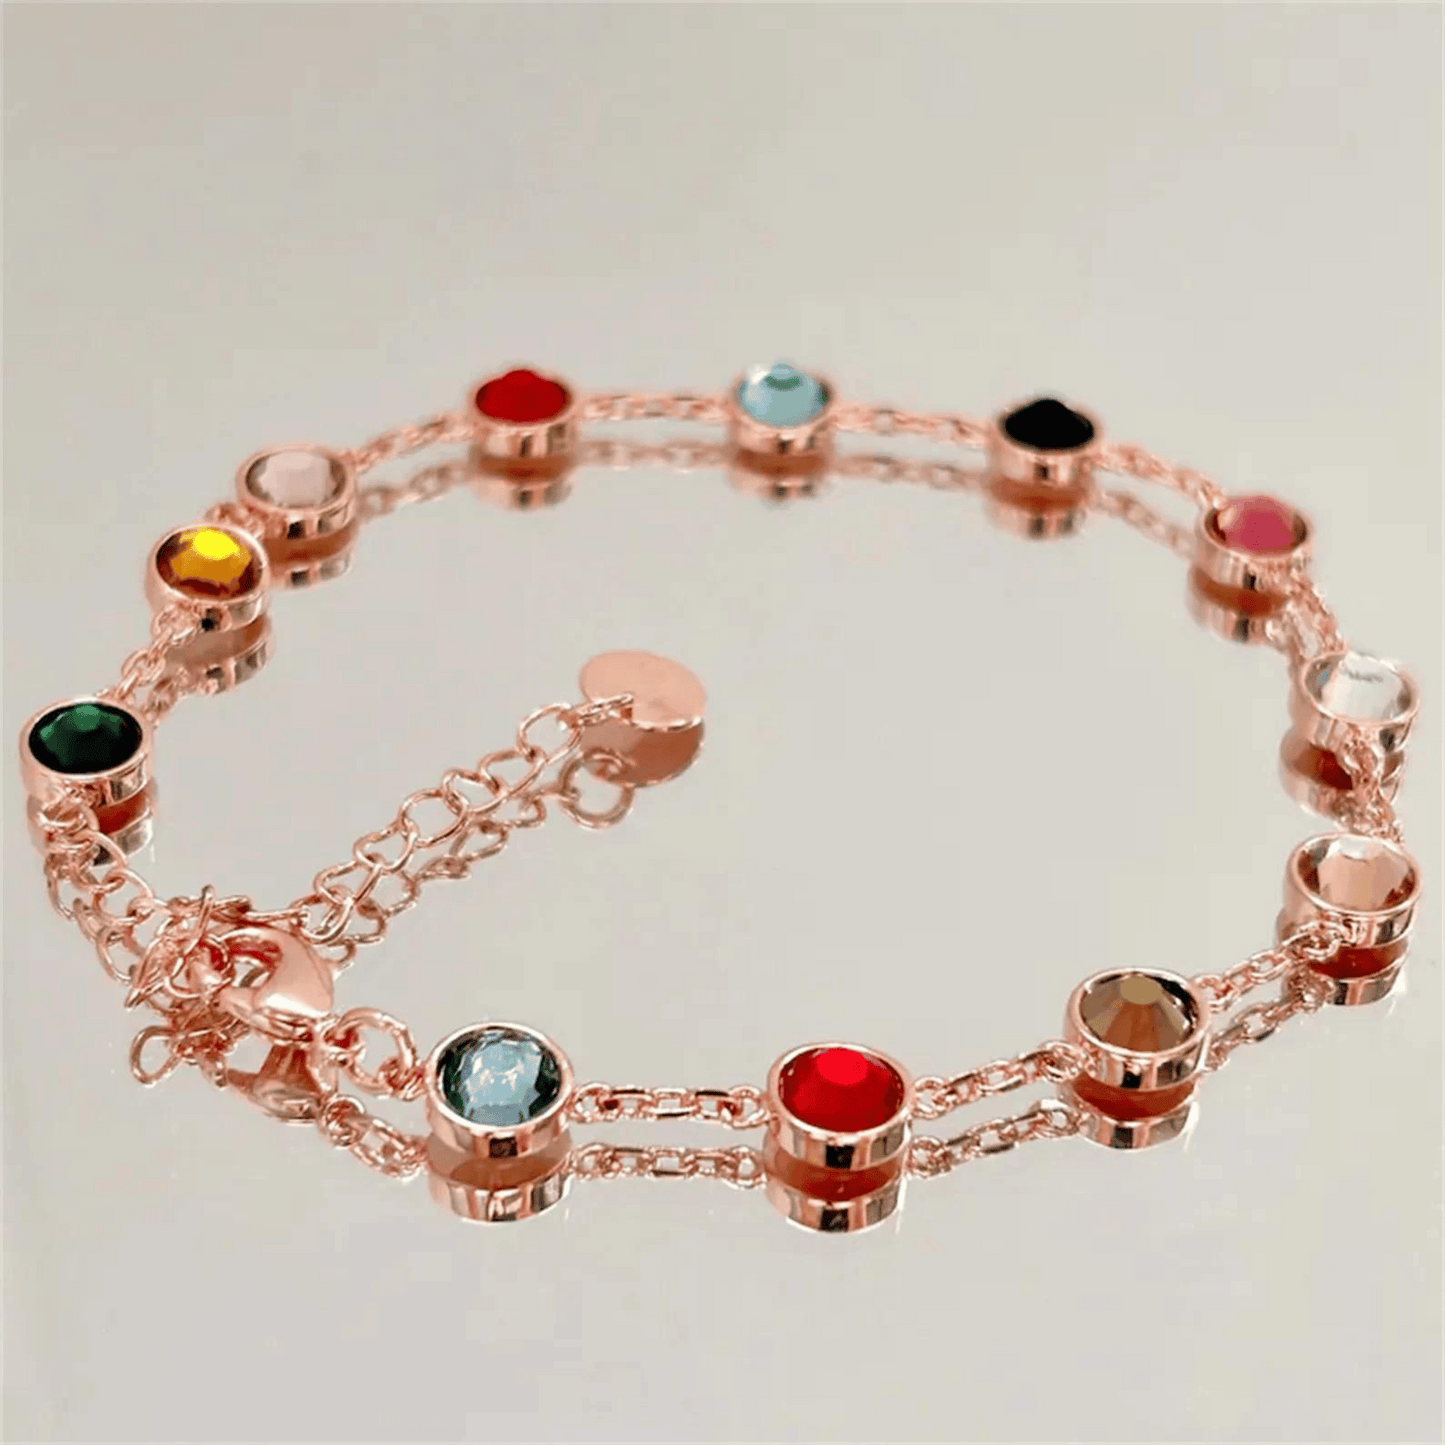 Stainless Steel Bejeweled Bracelet Taylor Swift - Rose Gold Color